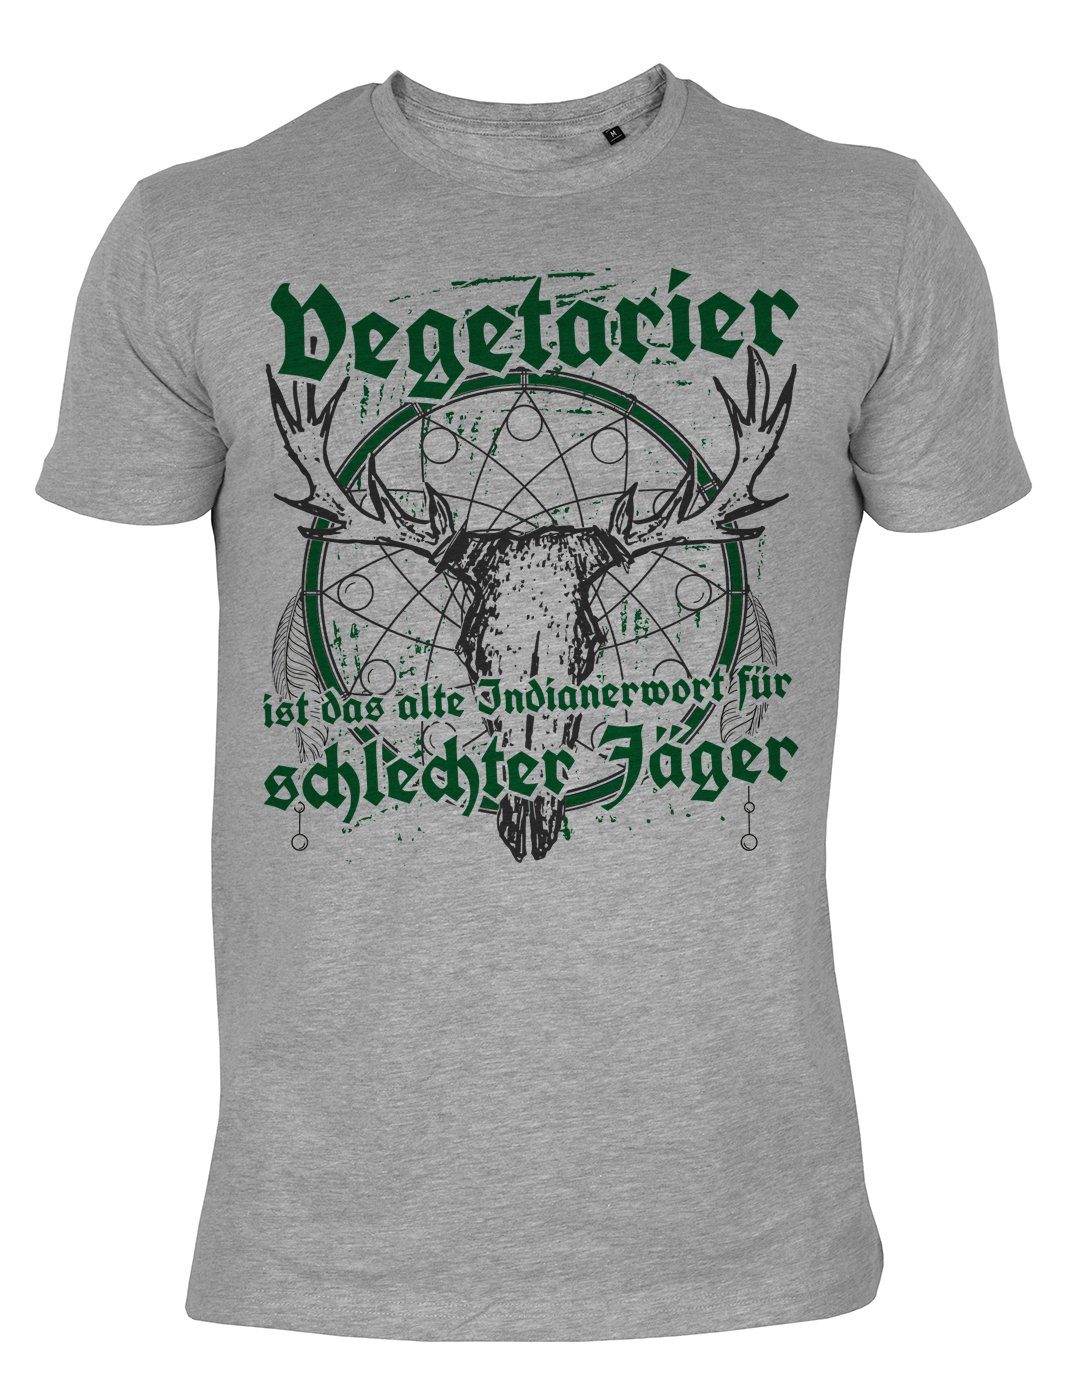 Vegetarier Jäger Jäger T-Shirt Shirt Vegetarier Shirt ist Jäger Shirt: das alte Tini - Sprüche ....schlechter